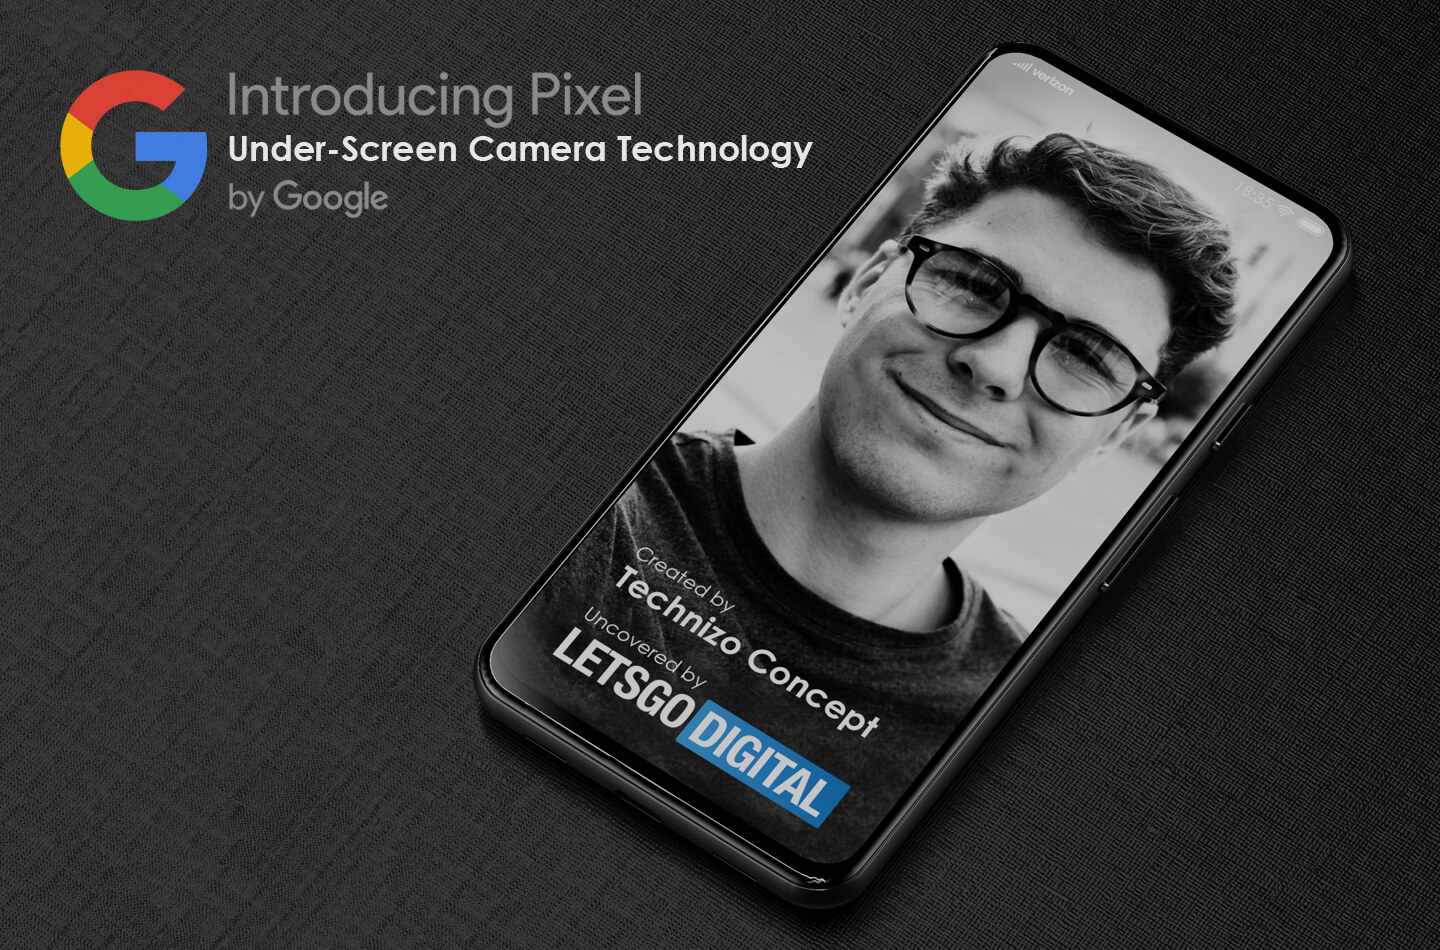 google-pixel-smartphone-with-under-screen-camera